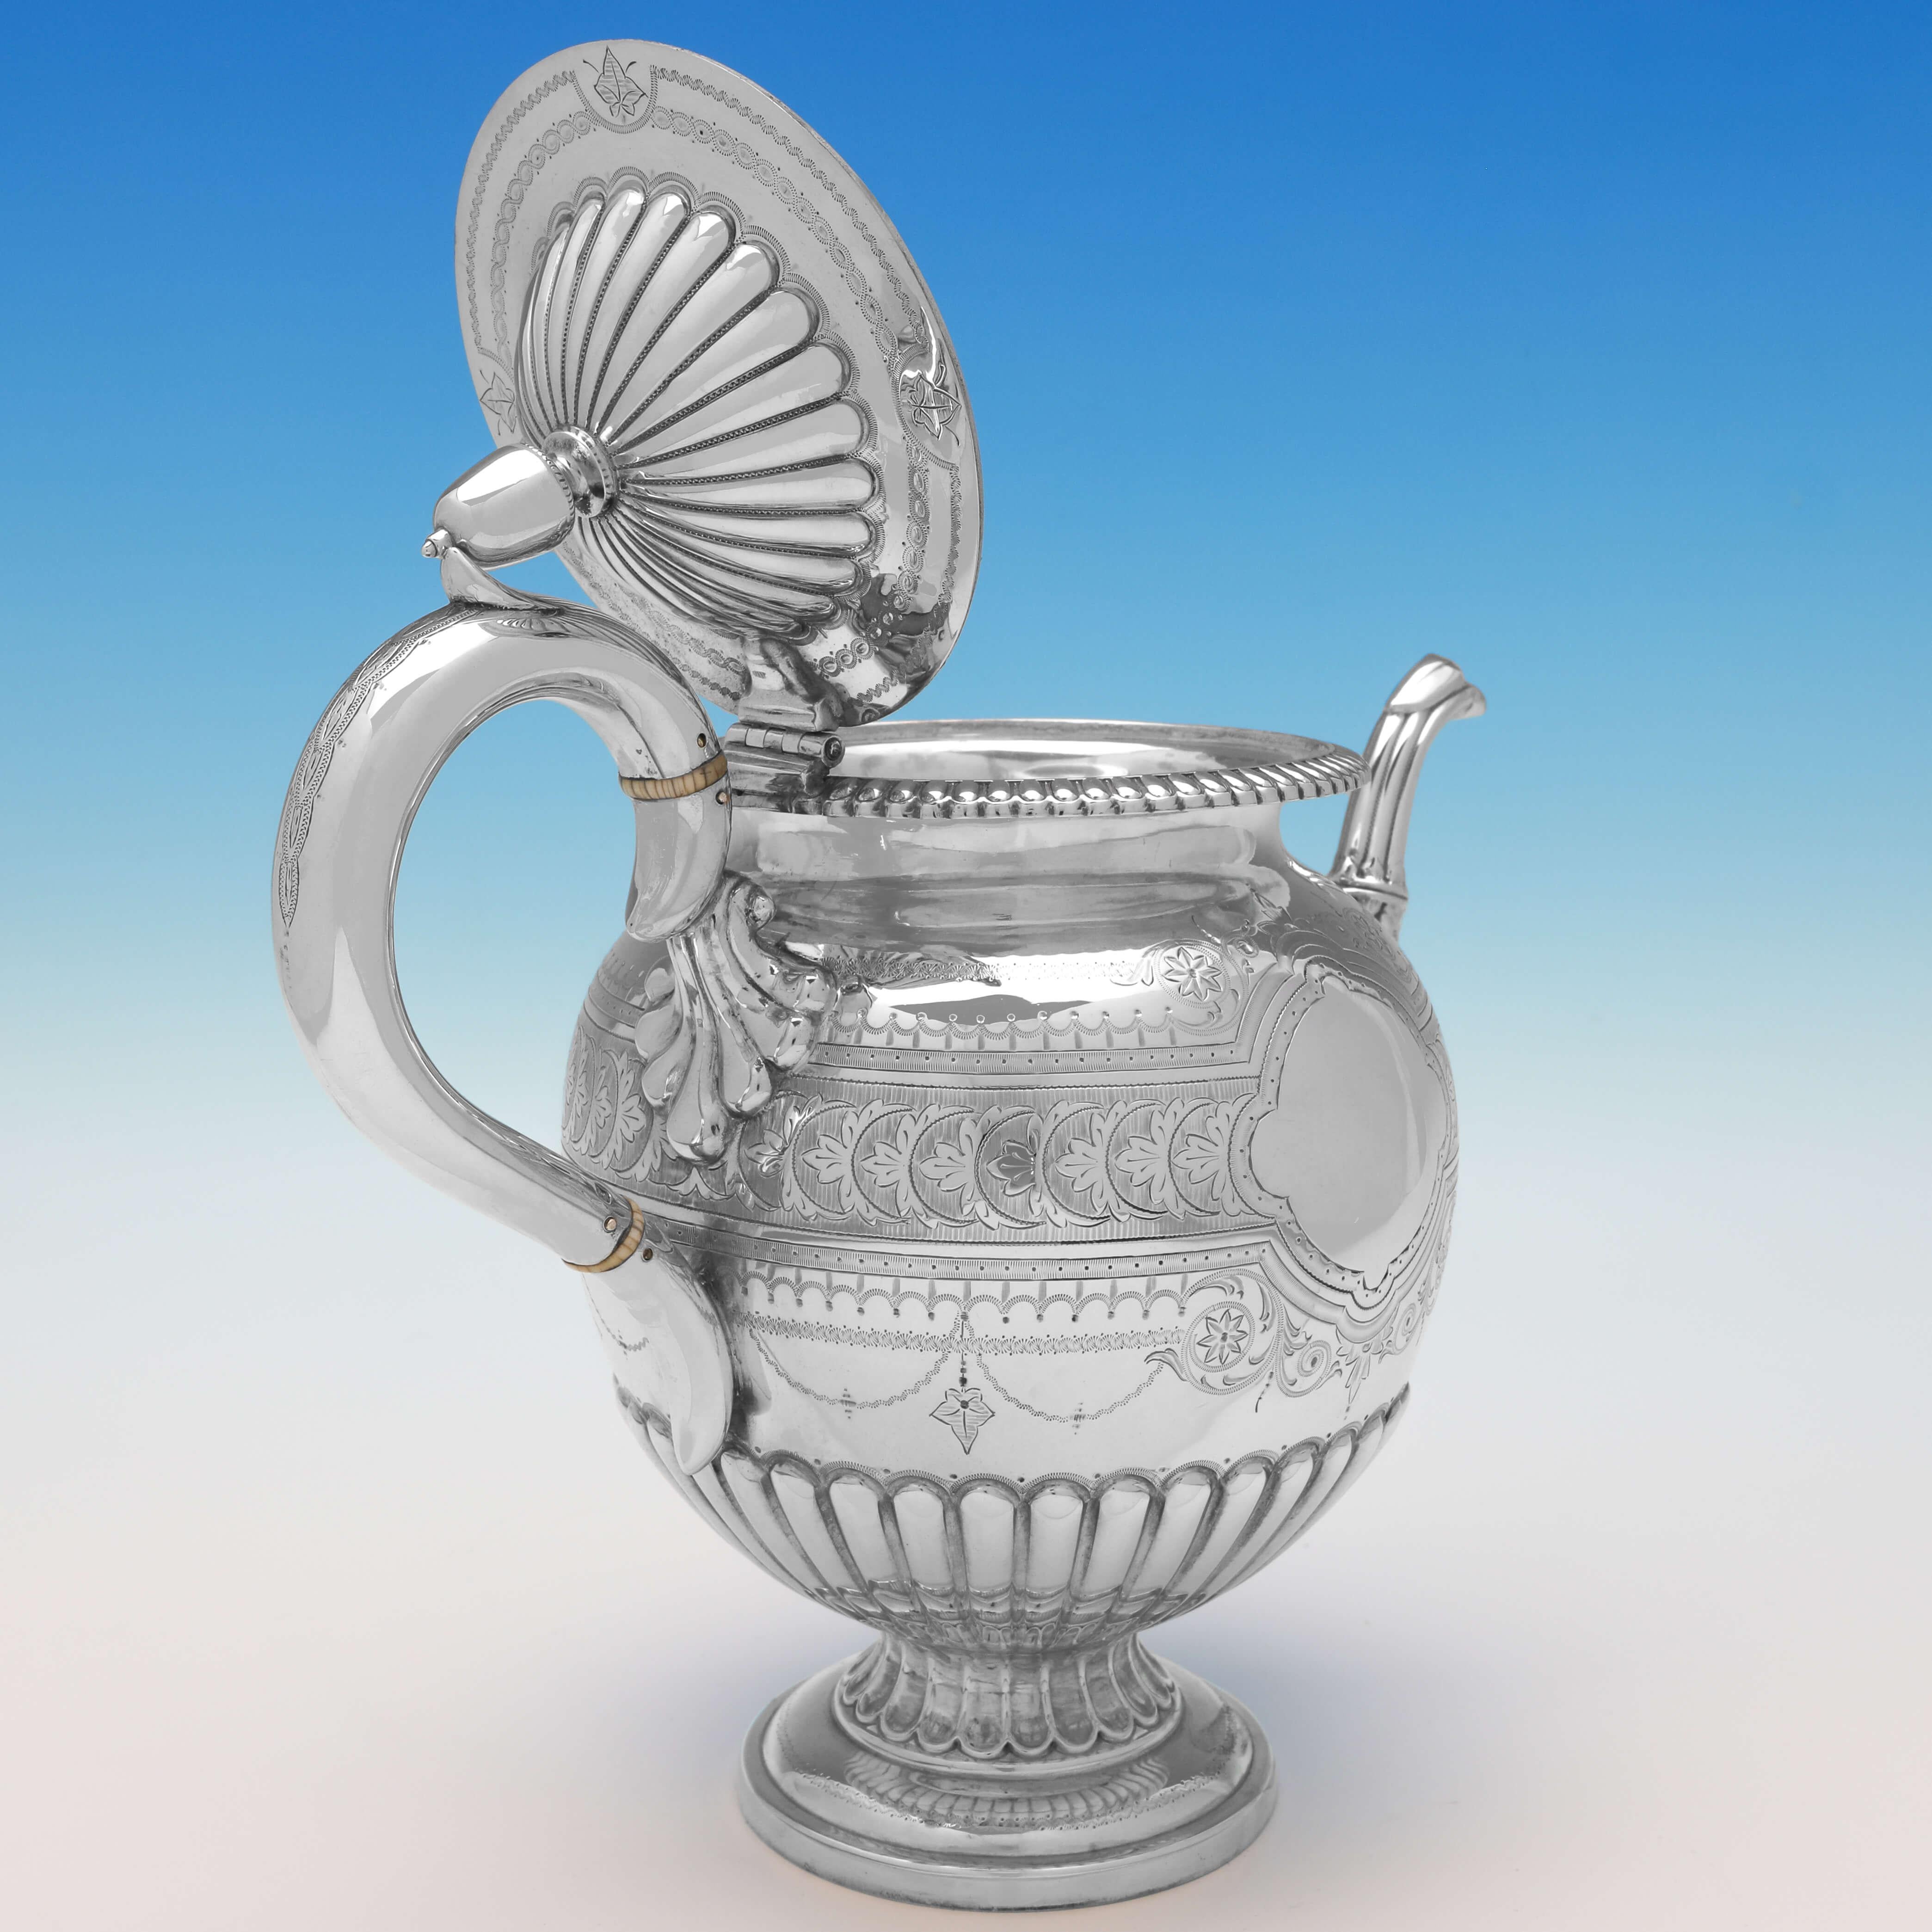 English Engraved Victorian Sterling Silver Tea Set - 3 Piece - Urn Shape - 1876 For Sale